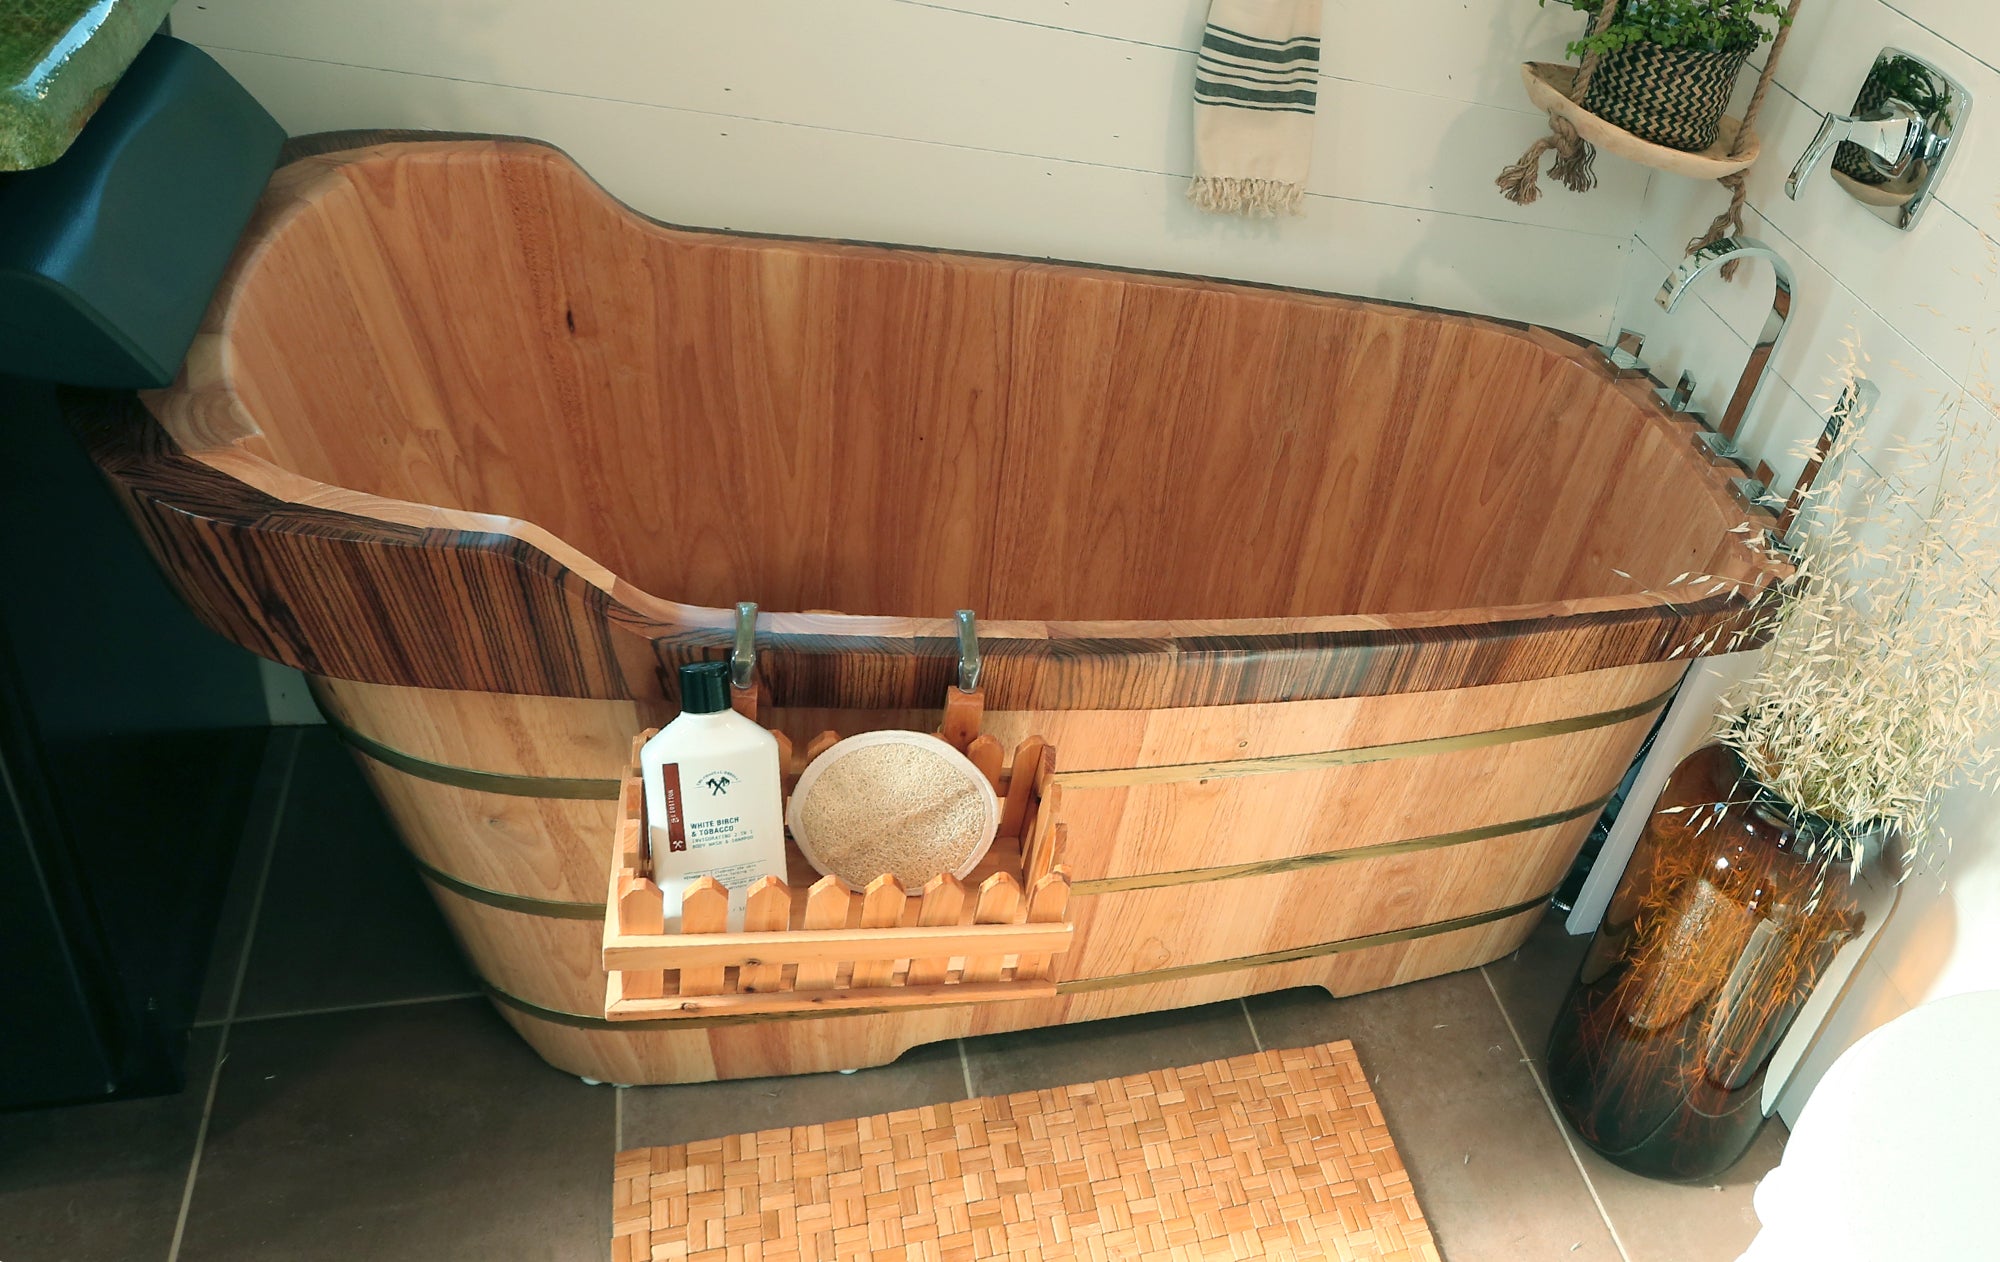 Alfi AB1148 59" Free Standing Wooden Bathtub with Chrome Tub Filler